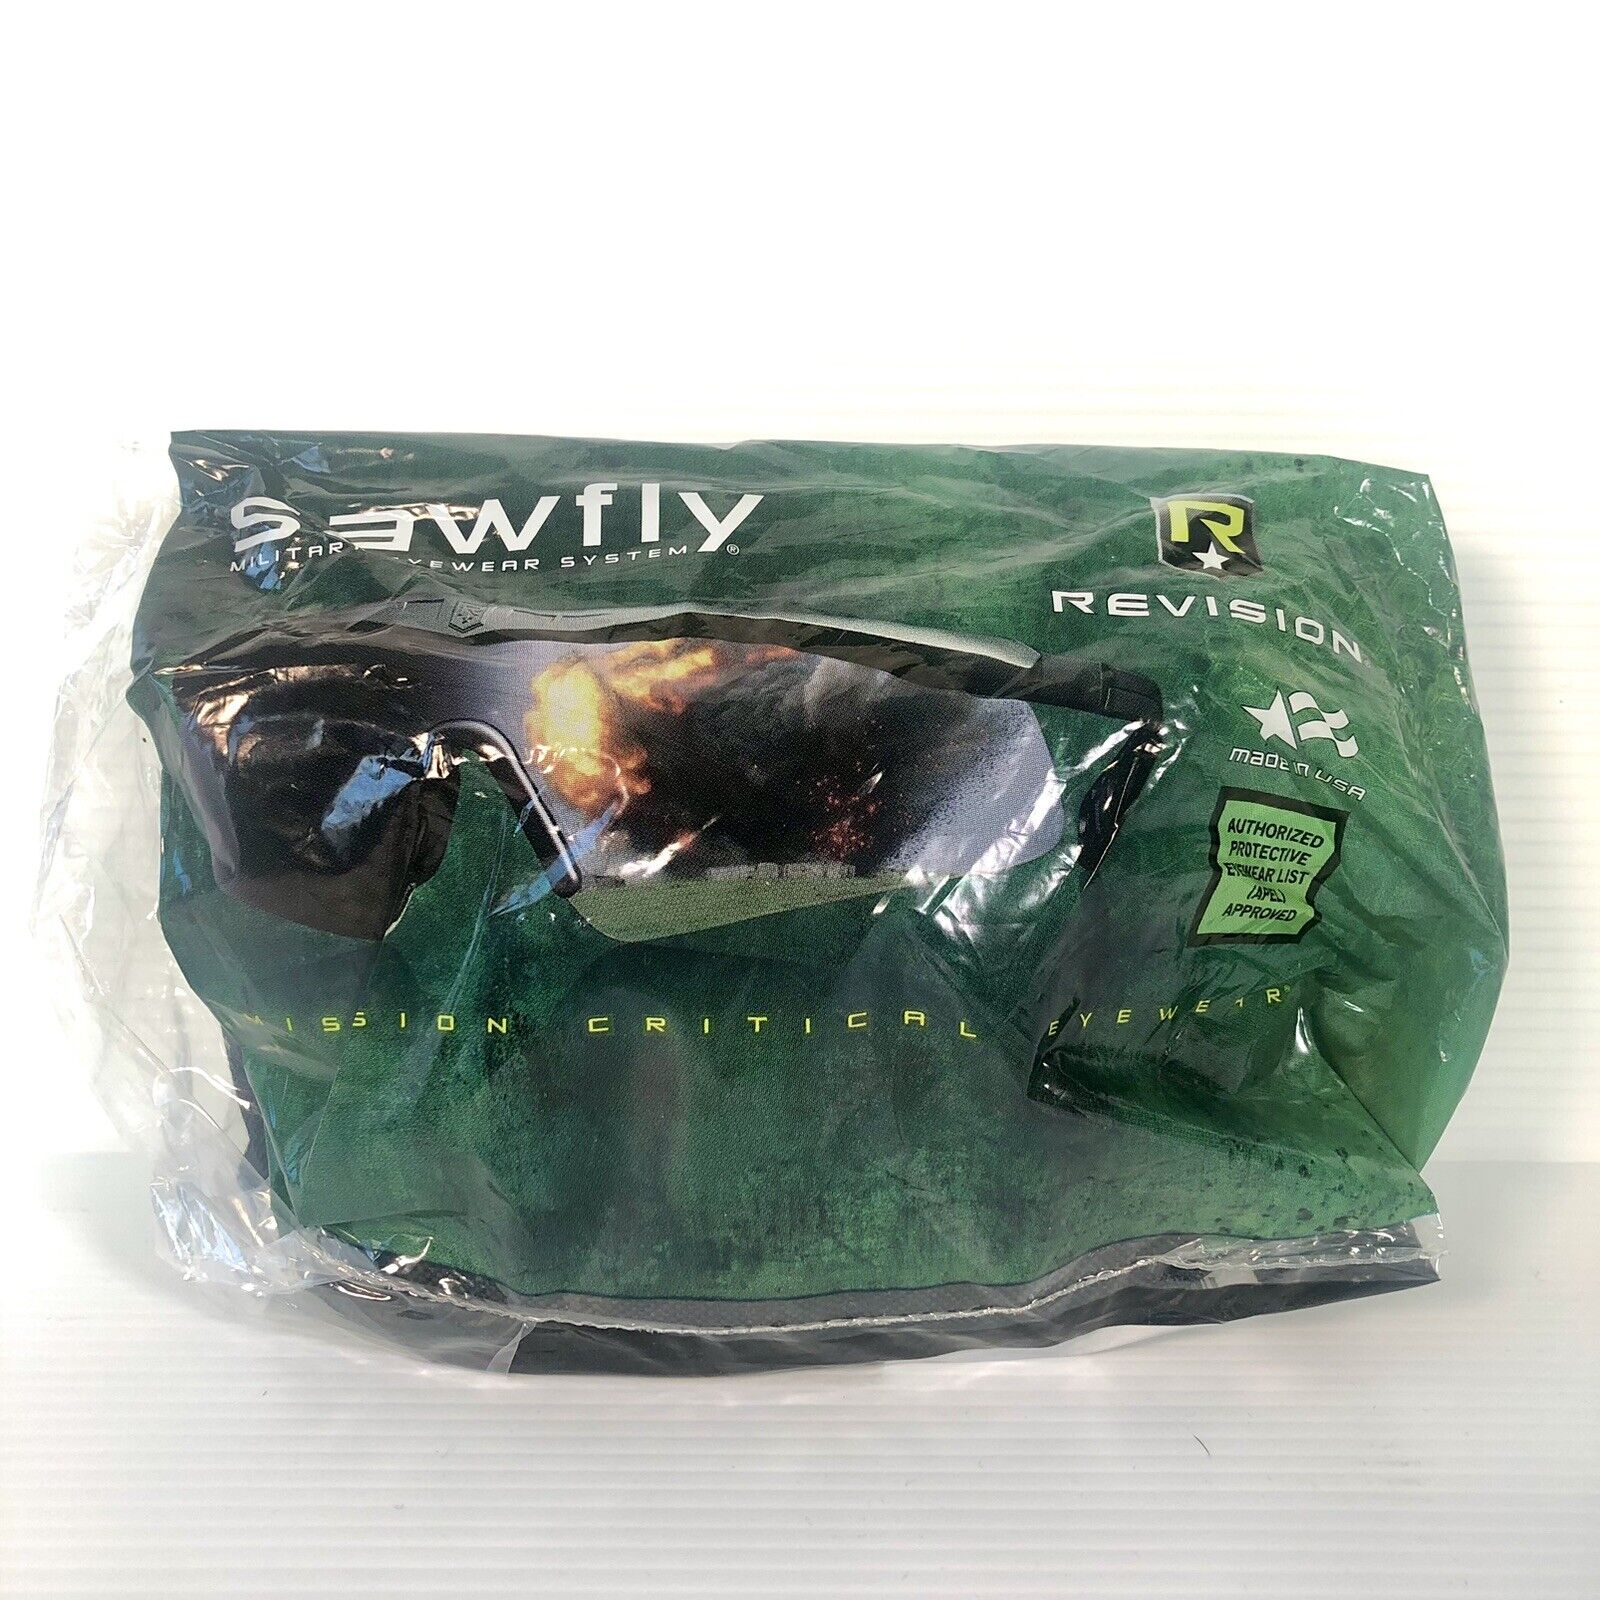 Revision Sawfly Military Eyewear System Mission Critical Eyewear Kit Glasses NEW